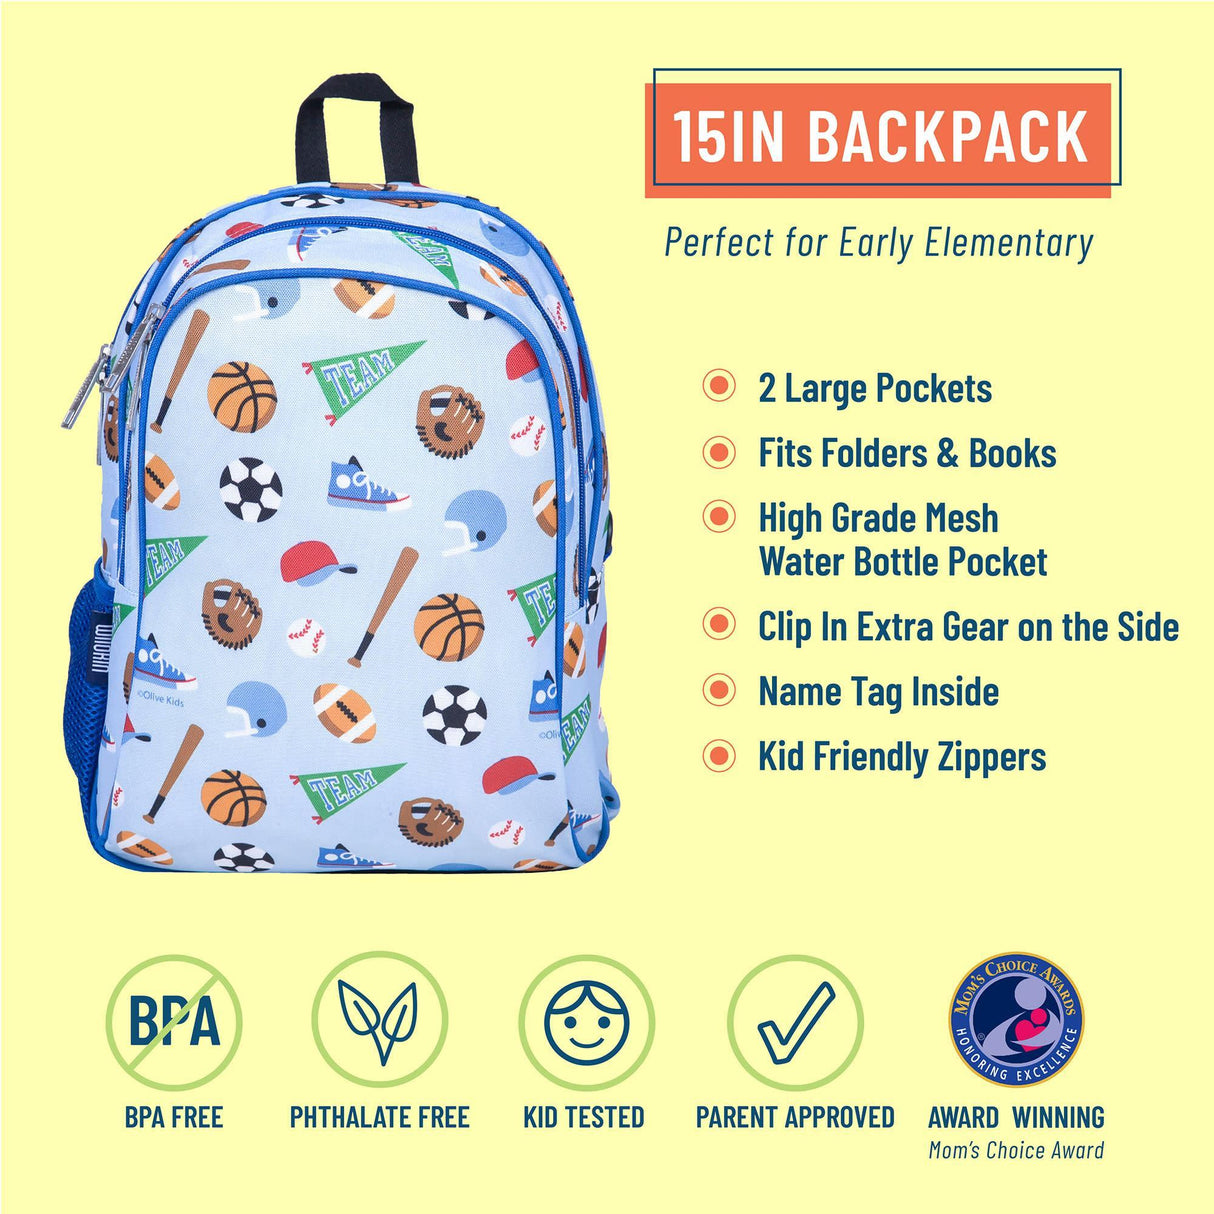 Wildkin Sports Backpack - 14406